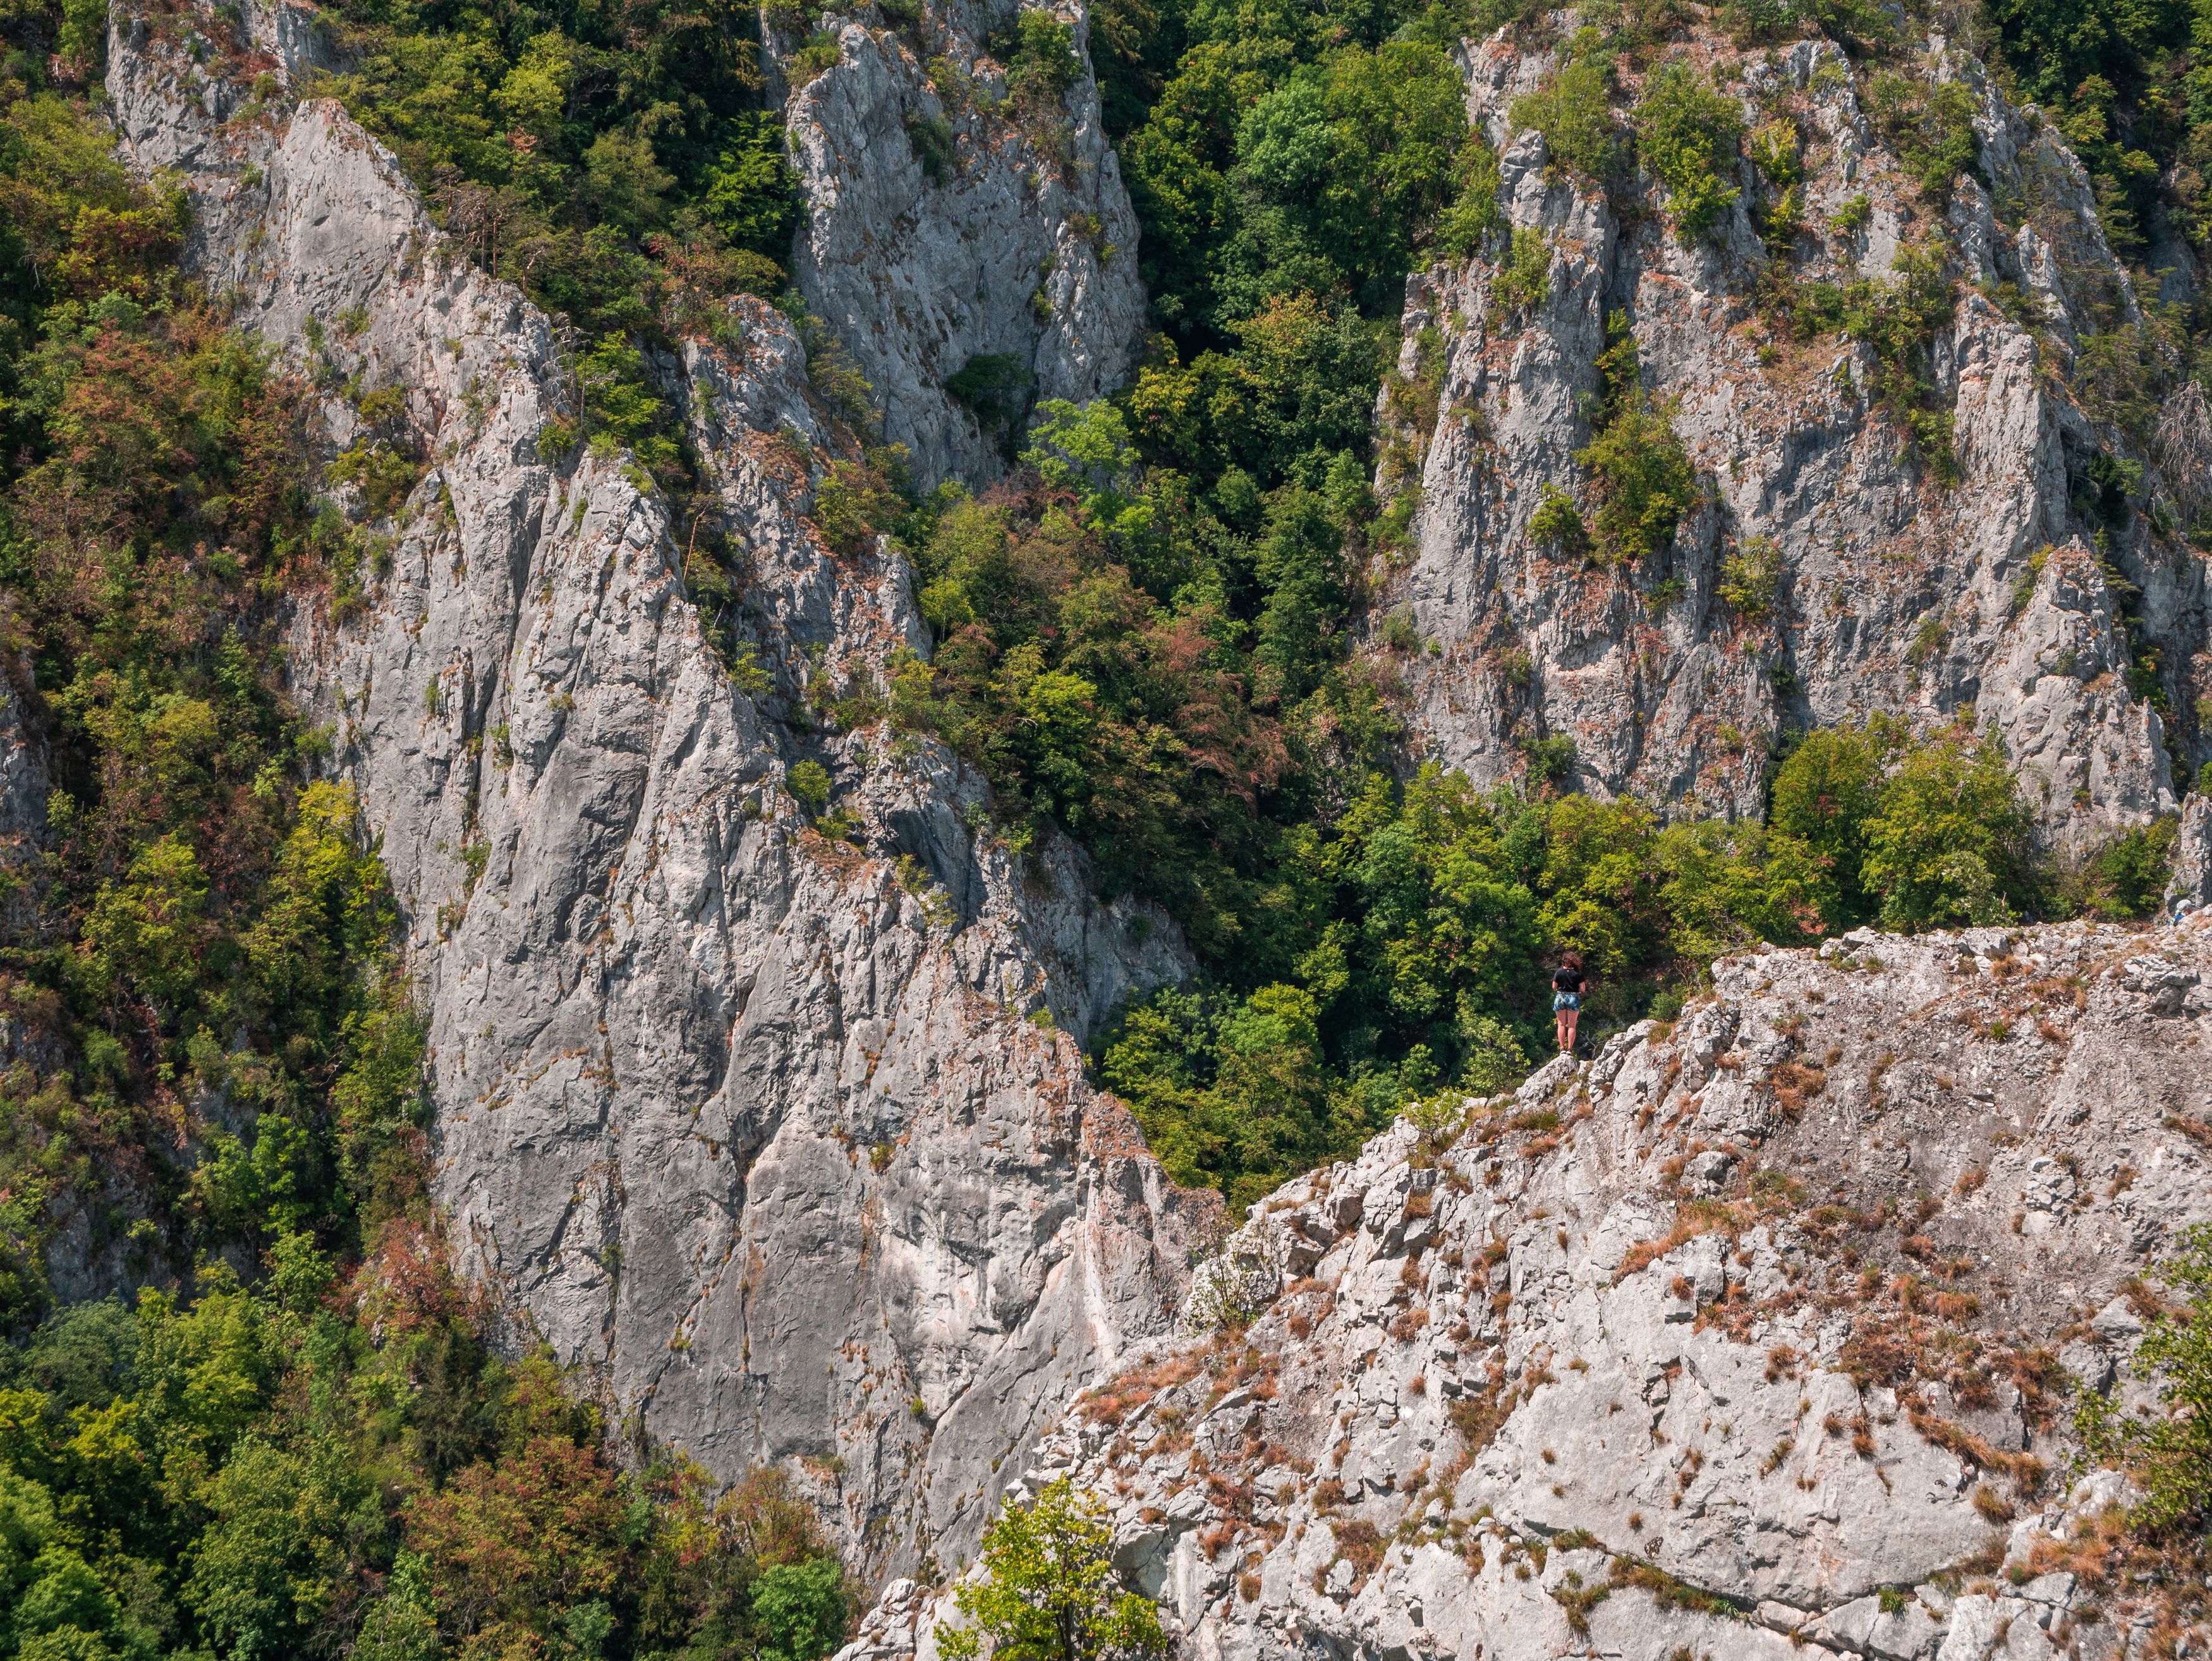 slovakia,landscape,nature,forest,rocks,wall,scale,nopeople, Slavomír Gajdoš